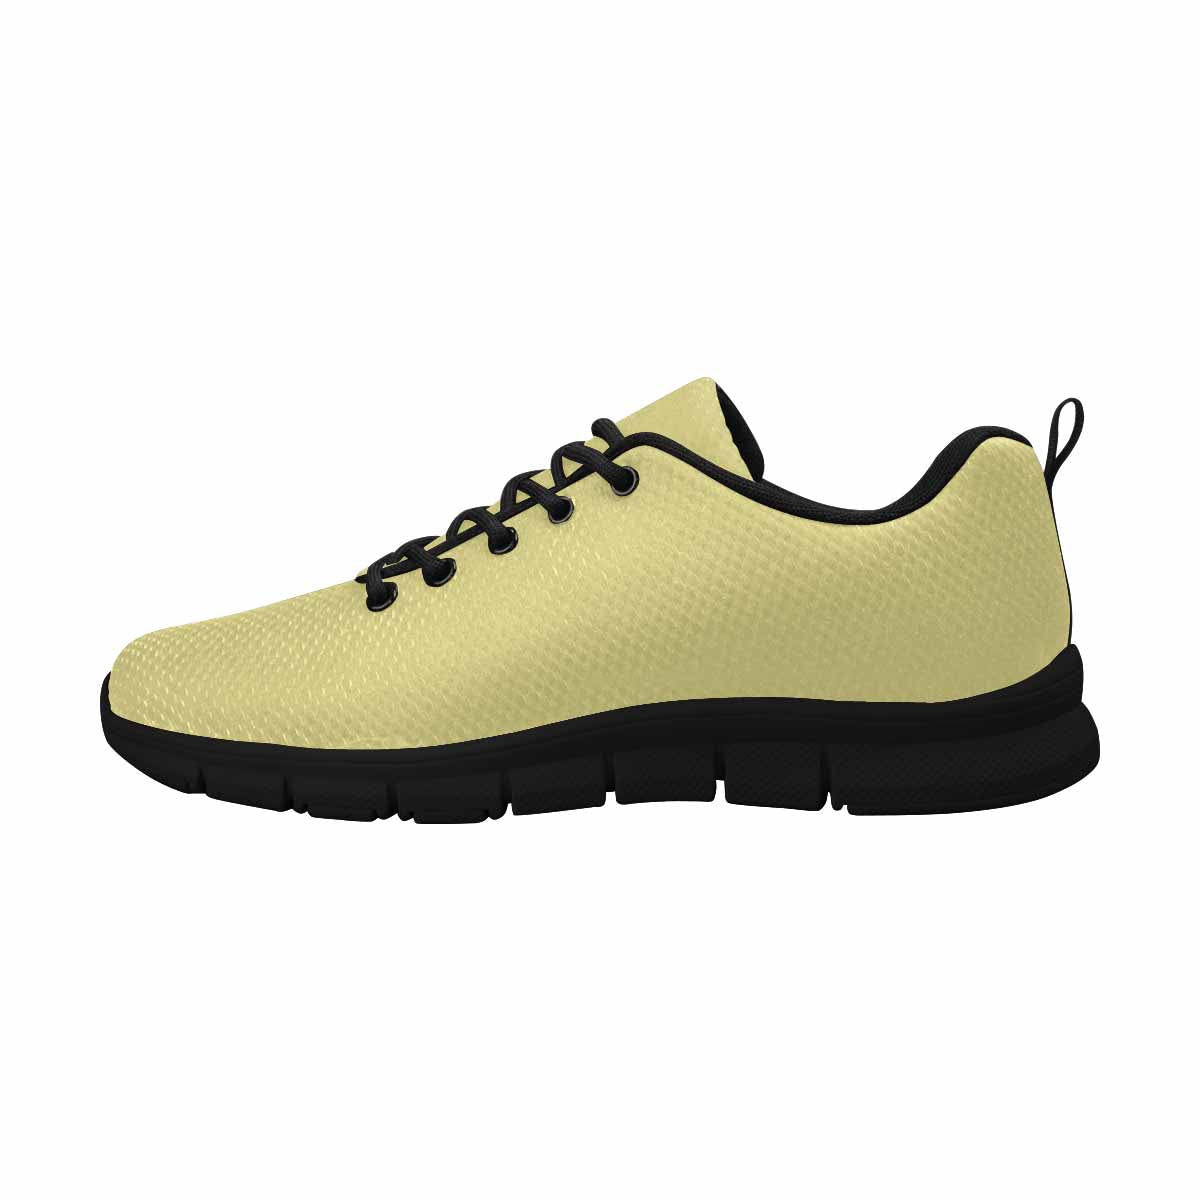 Sneakers For Men, Khaki Yellow Running Shoes